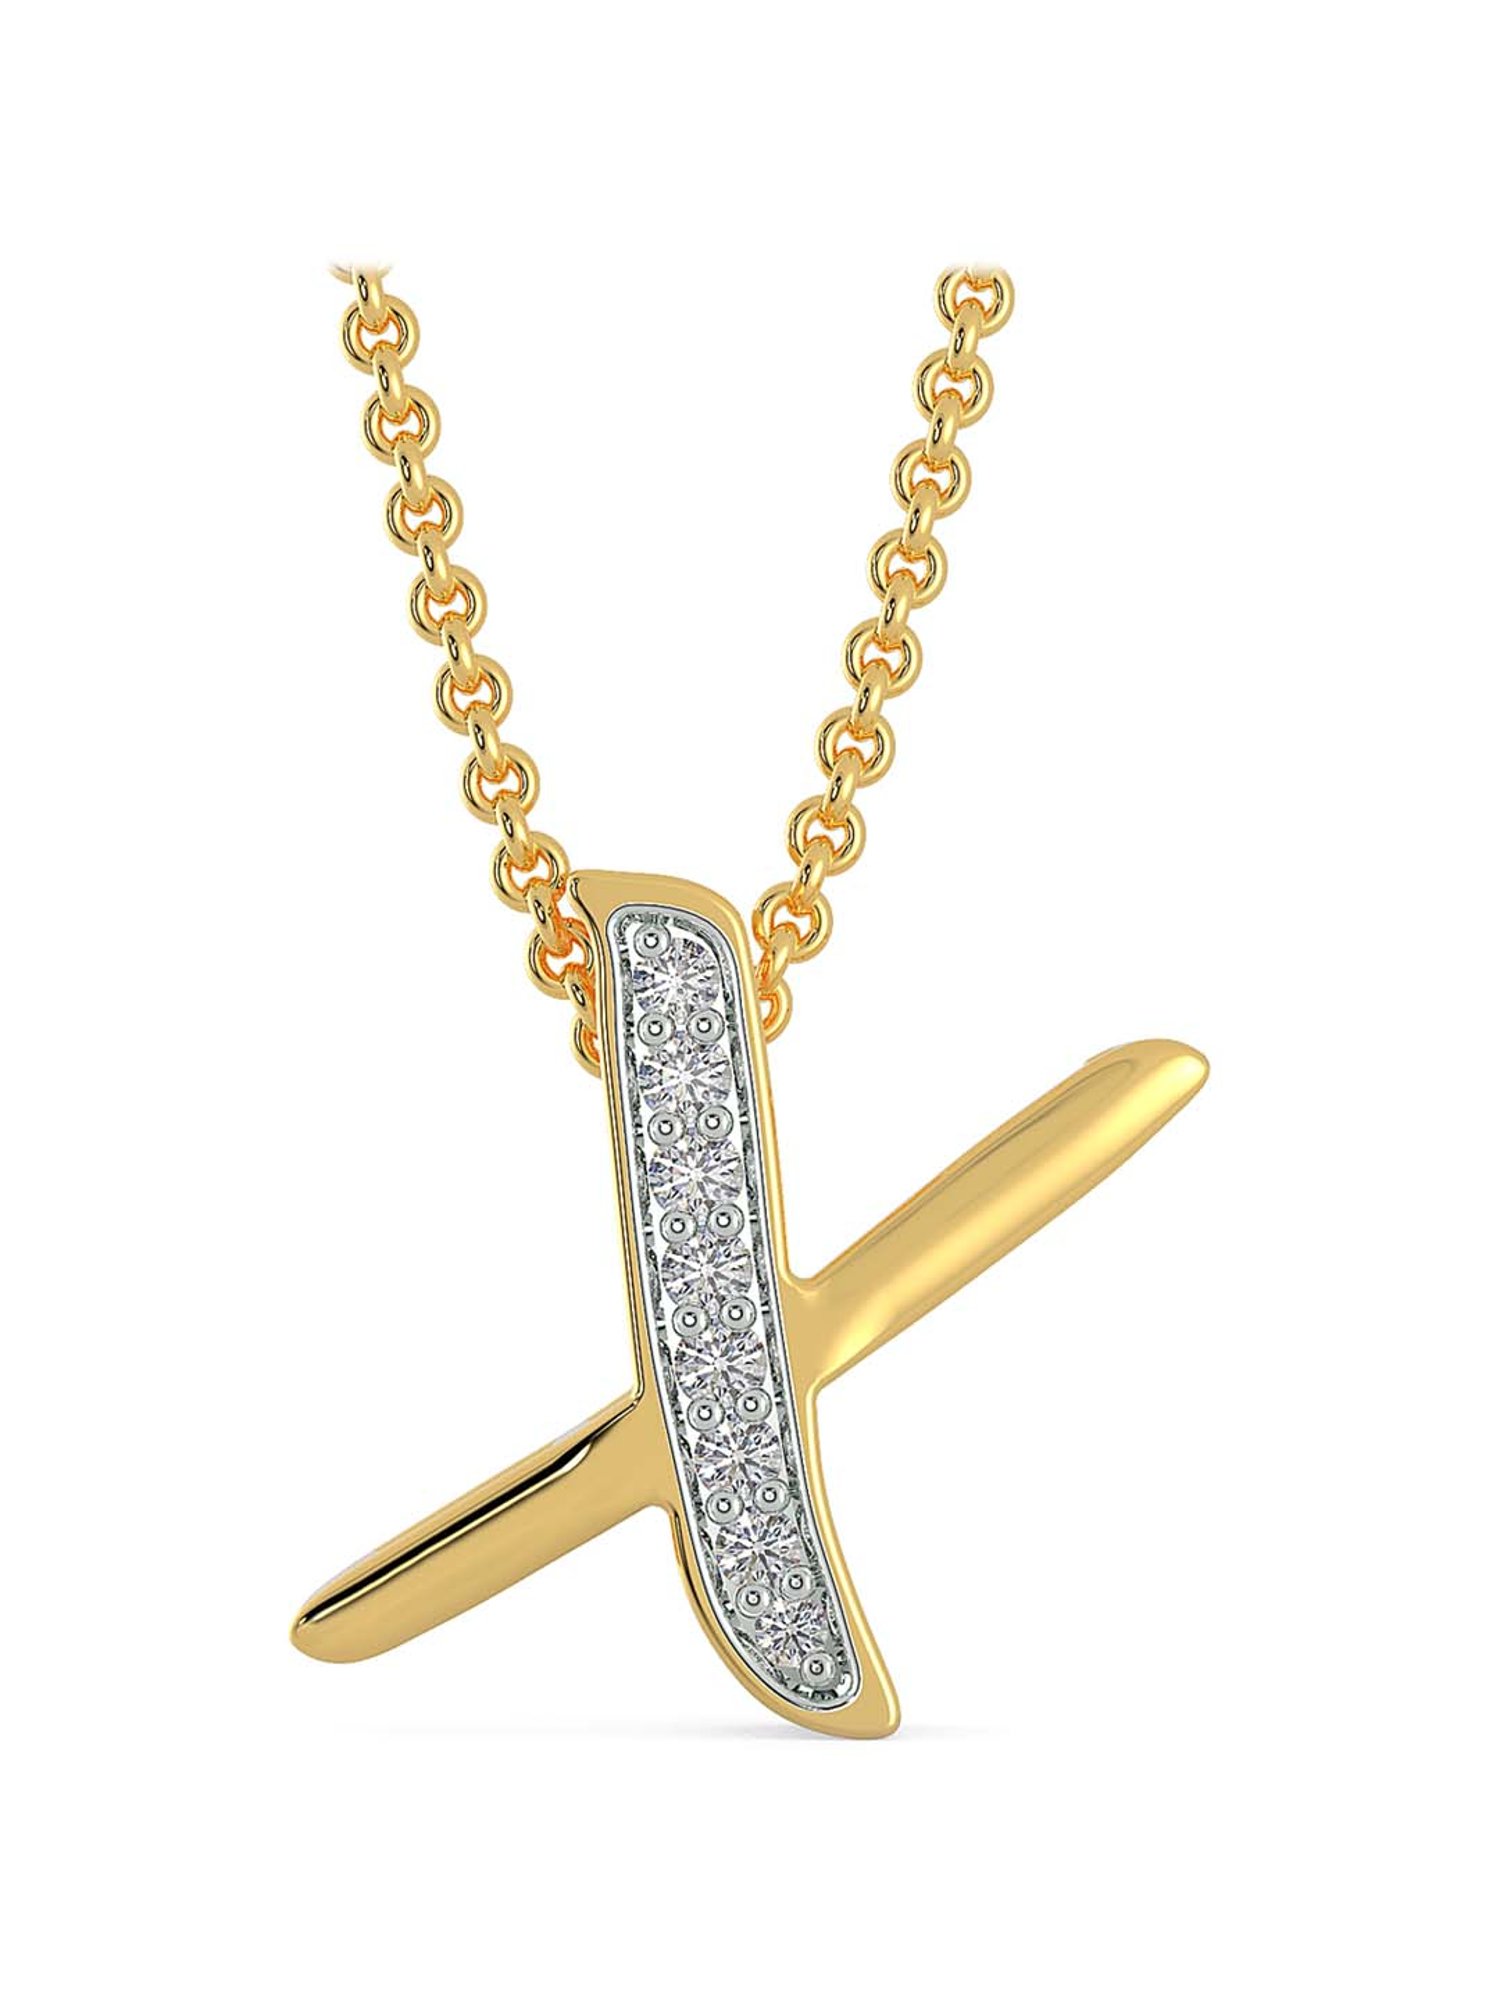 Tiffany & Co. Paloma Picasso Kiss XOX Diamond 18K Pendant Necklace White  Gold | eBay